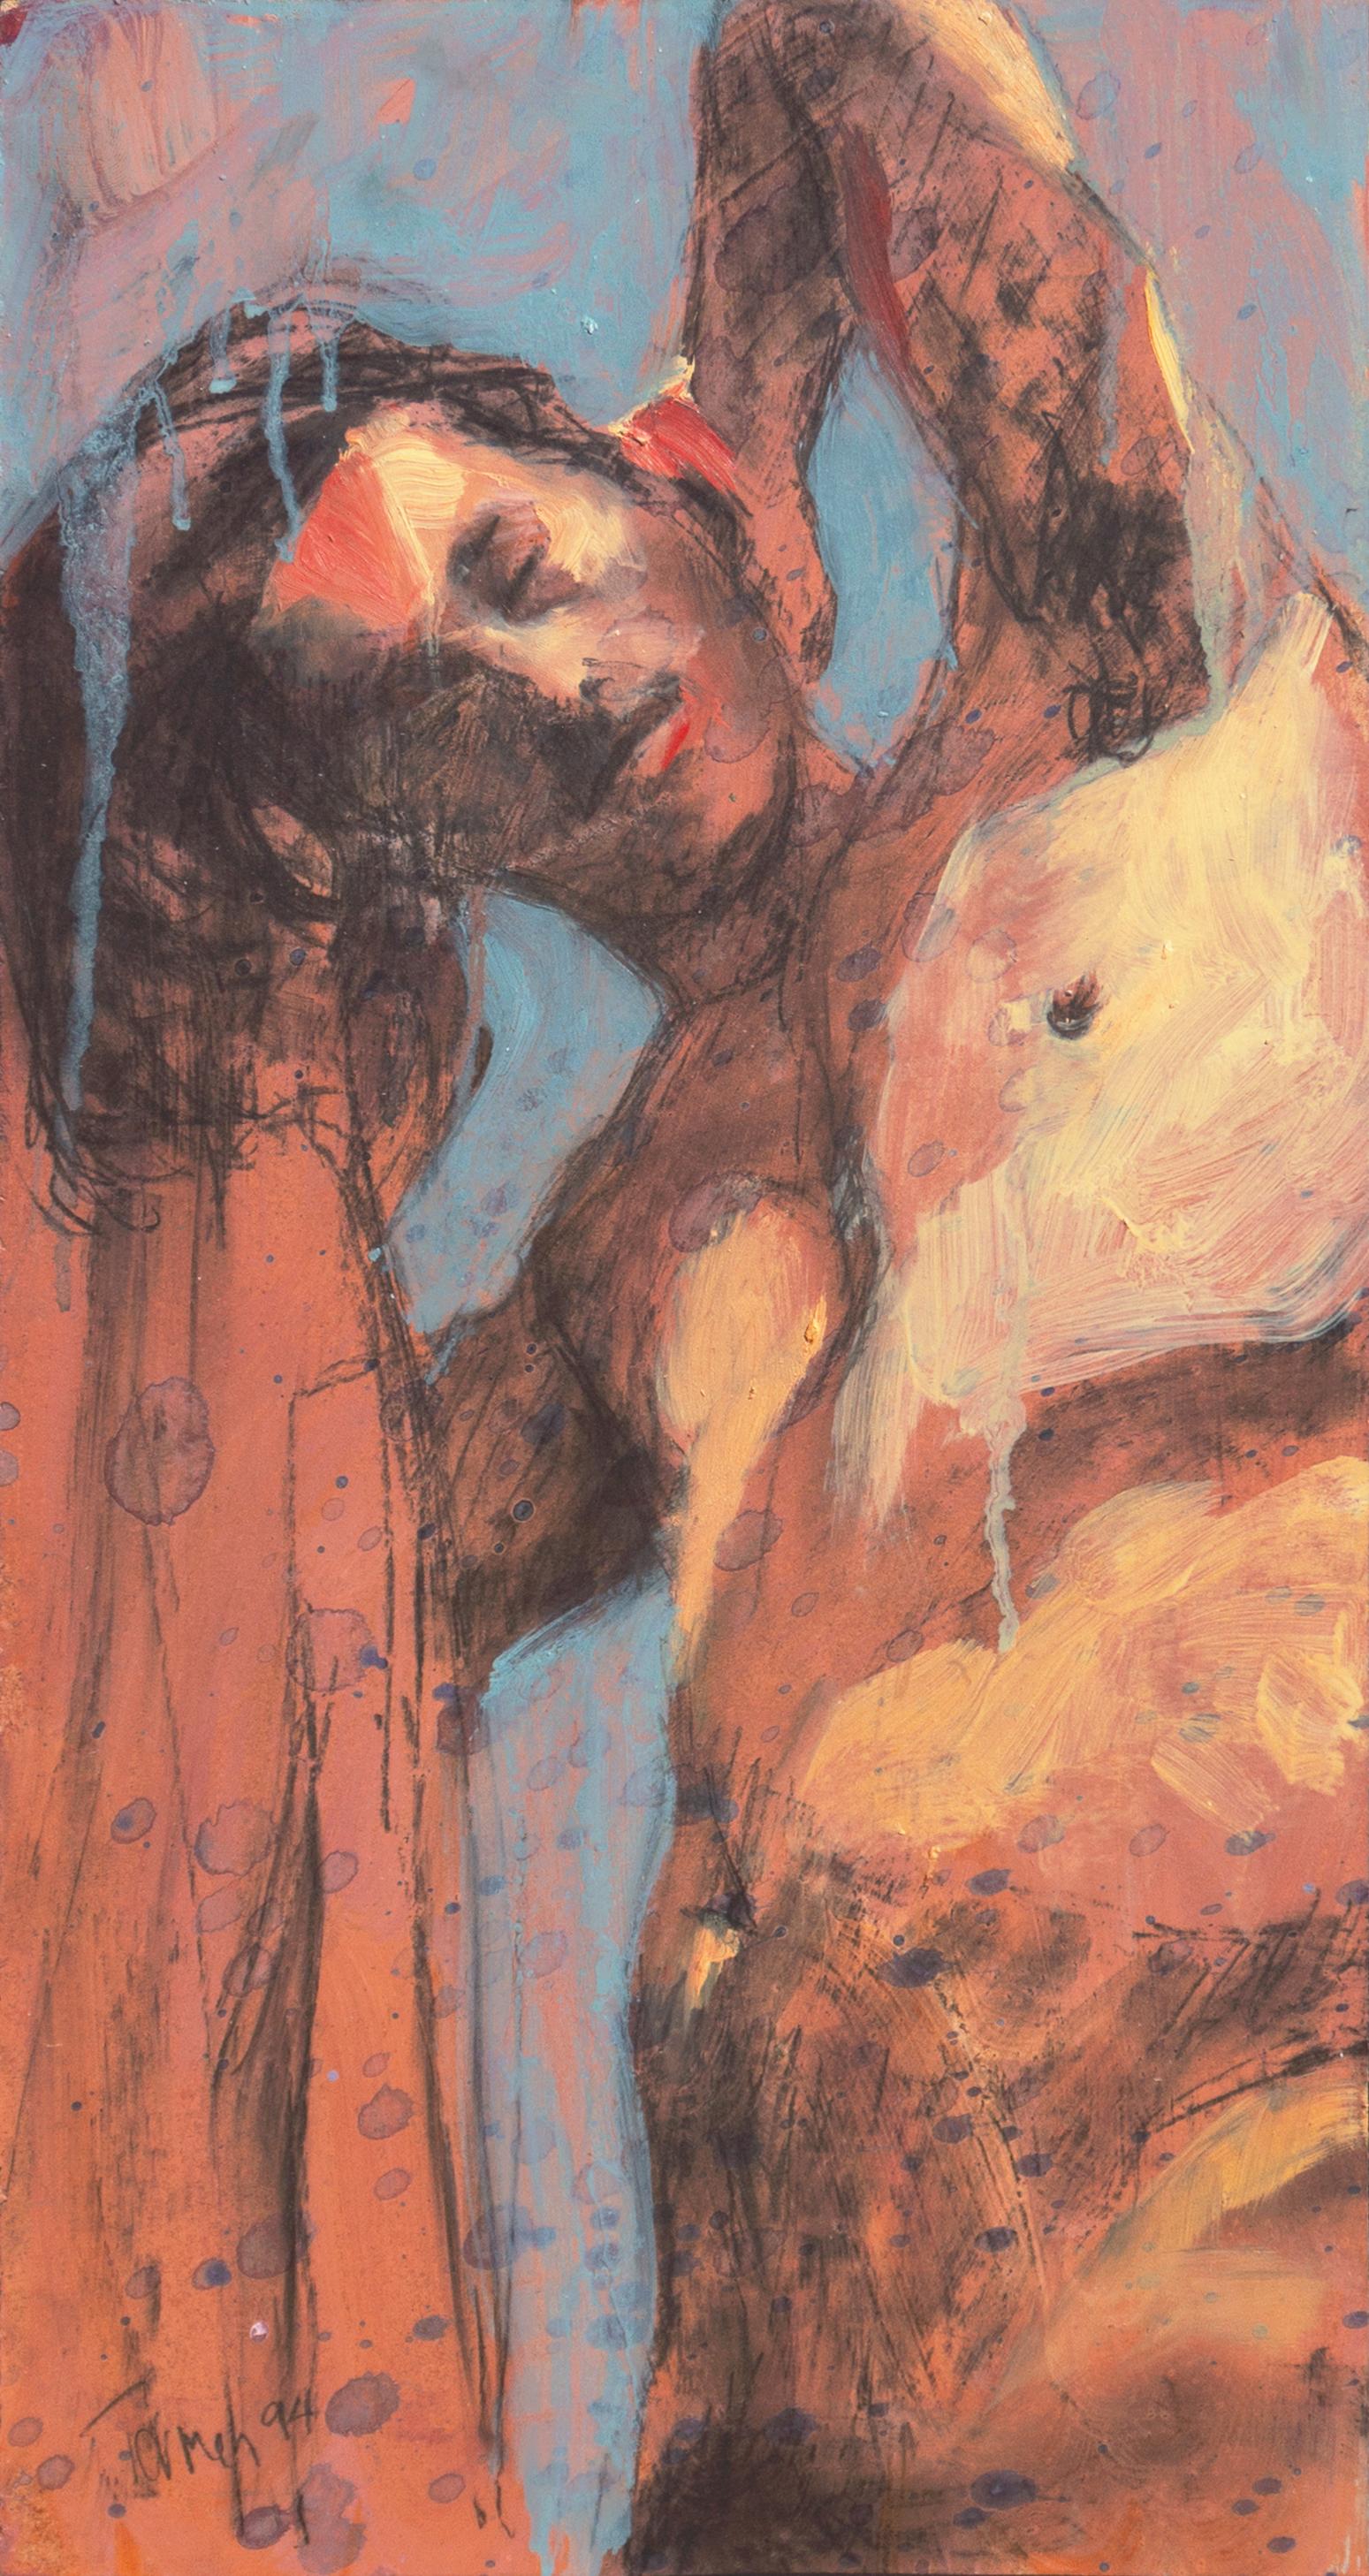 Termeh Yeghiazarian Nude Painting - 'Standing Nude', Figural, Iranian, Teheran, San Francisco Bay Area, SFAI